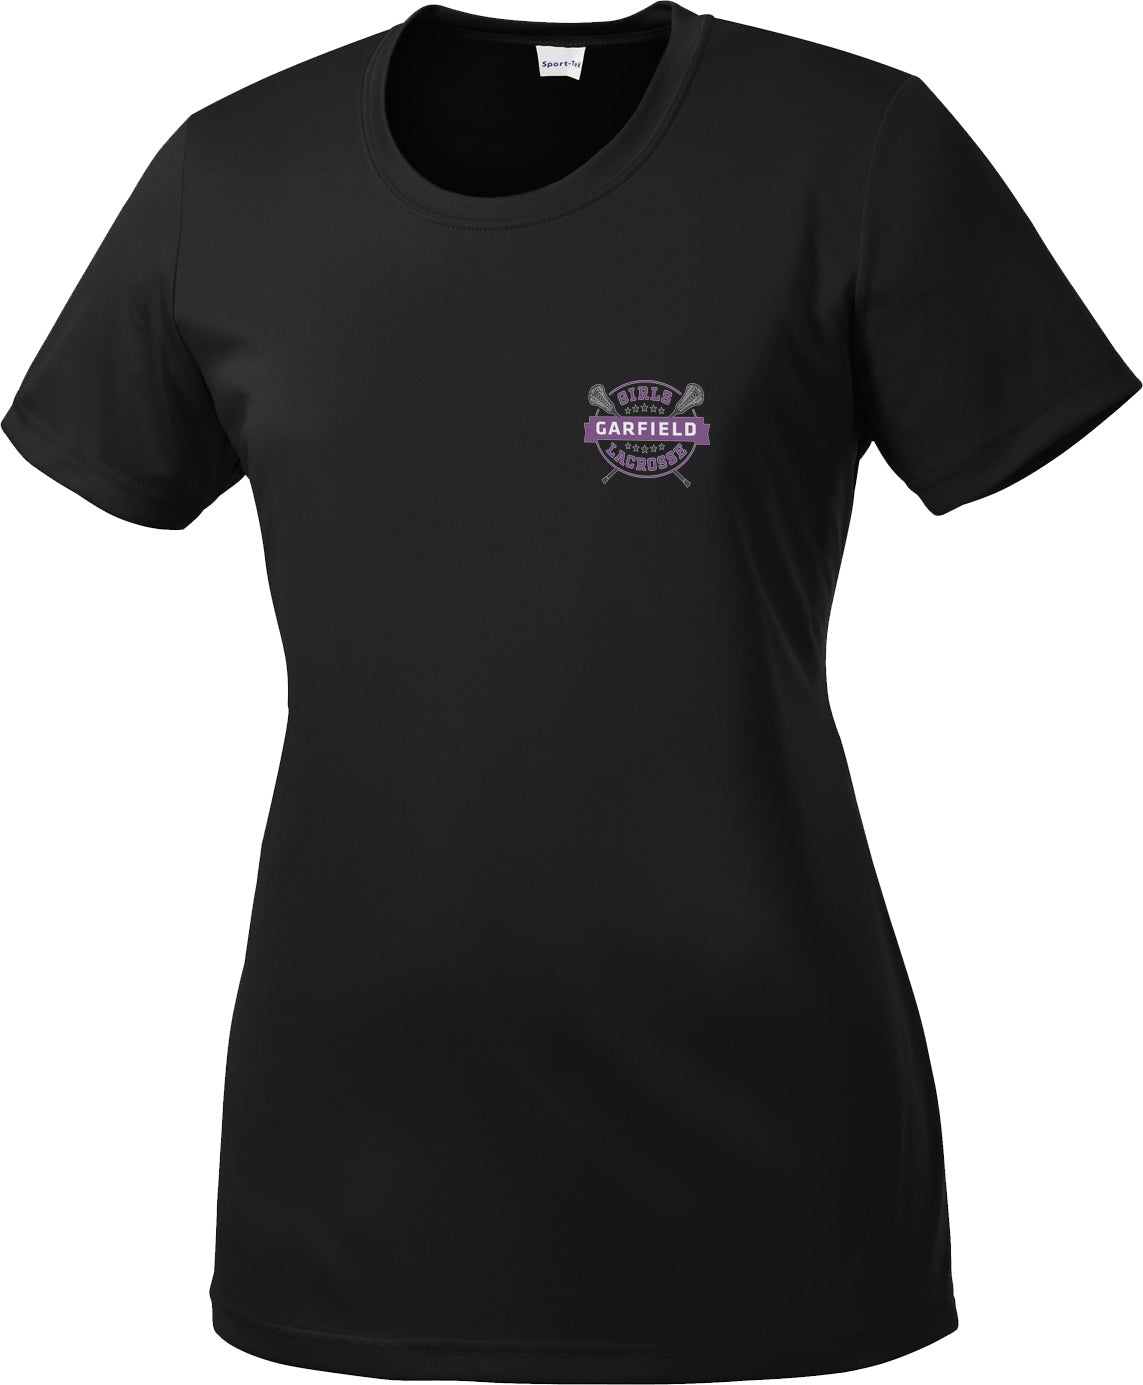 Garfield Women's Black Performance T-Shirt